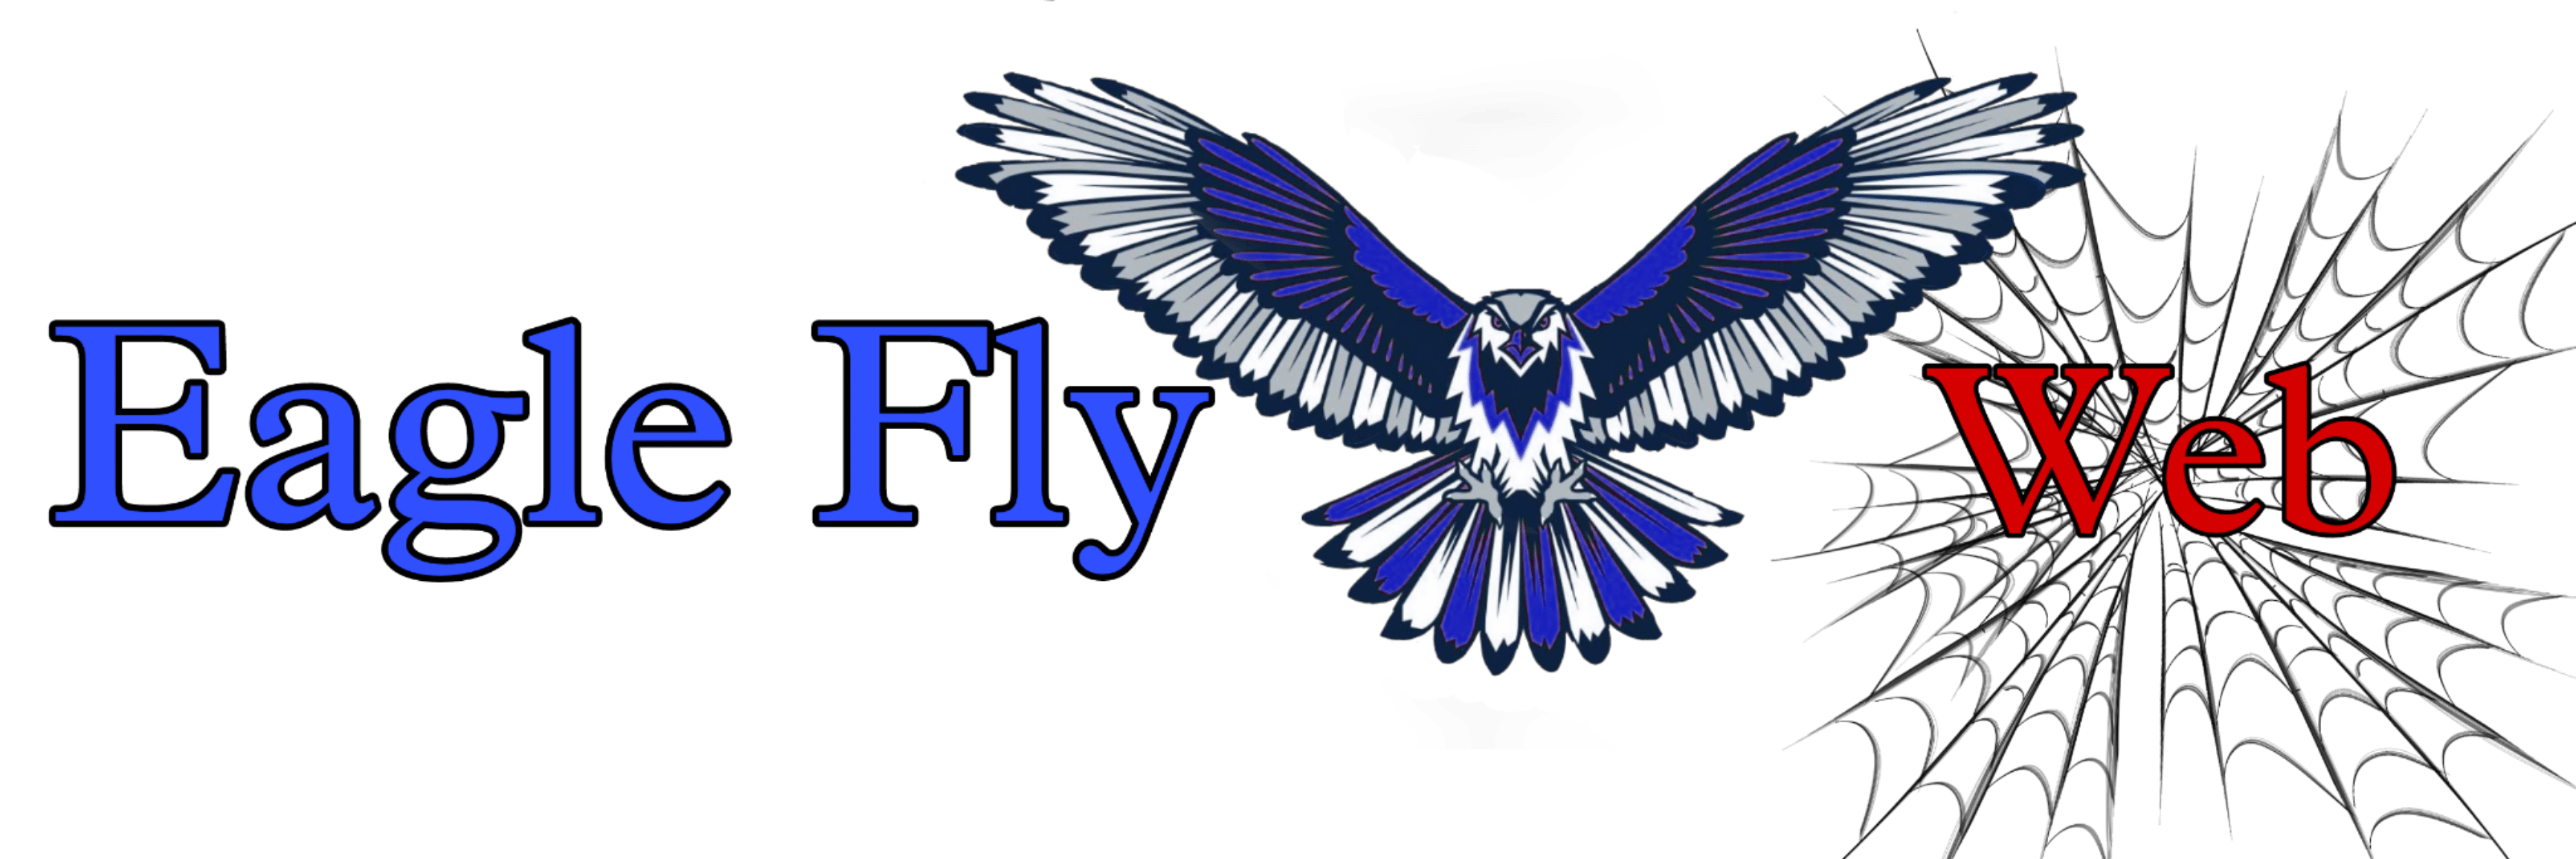 eagleflyweb